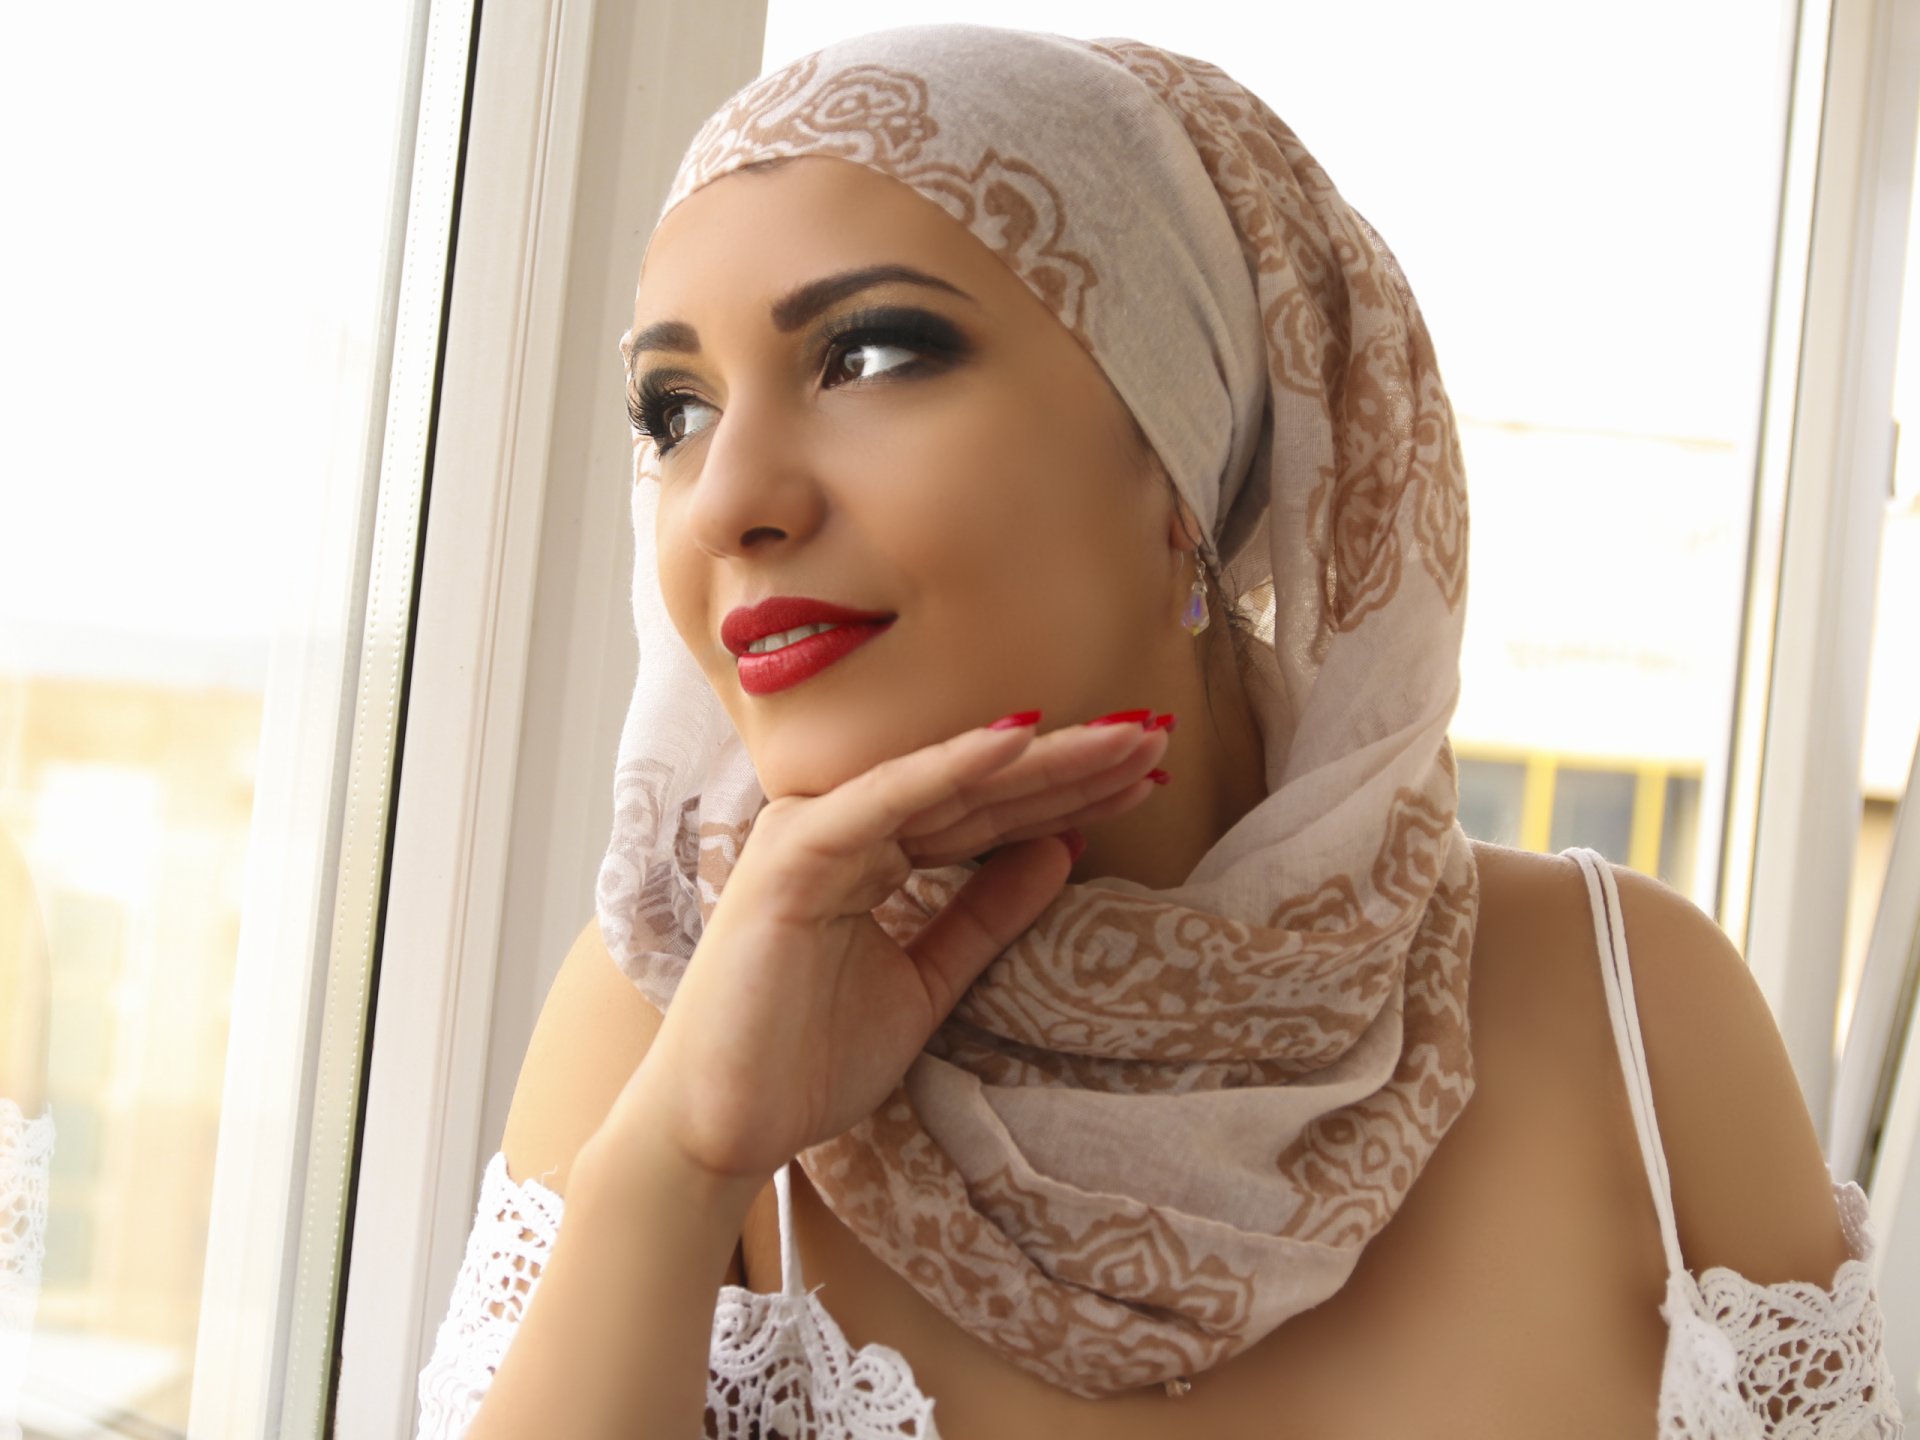 Arab arabic best adult free images